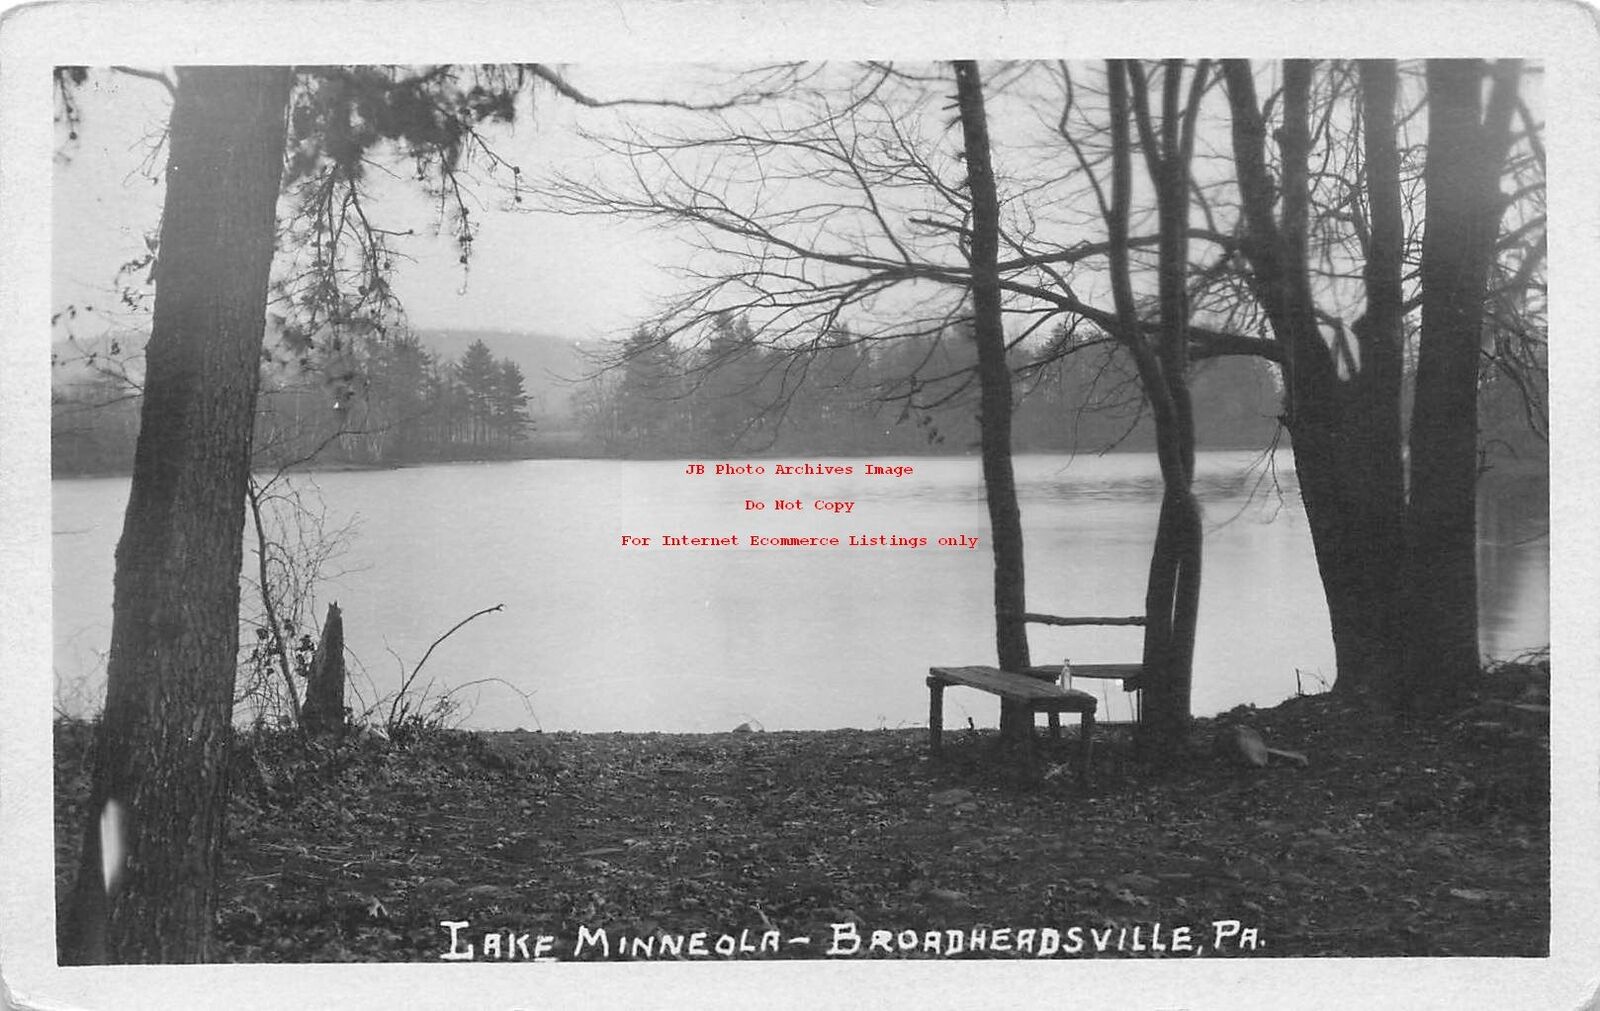 PA, Broadheadsville, Pennsylvania, RPPC, Lake Minneola, Shore Line View, Photo